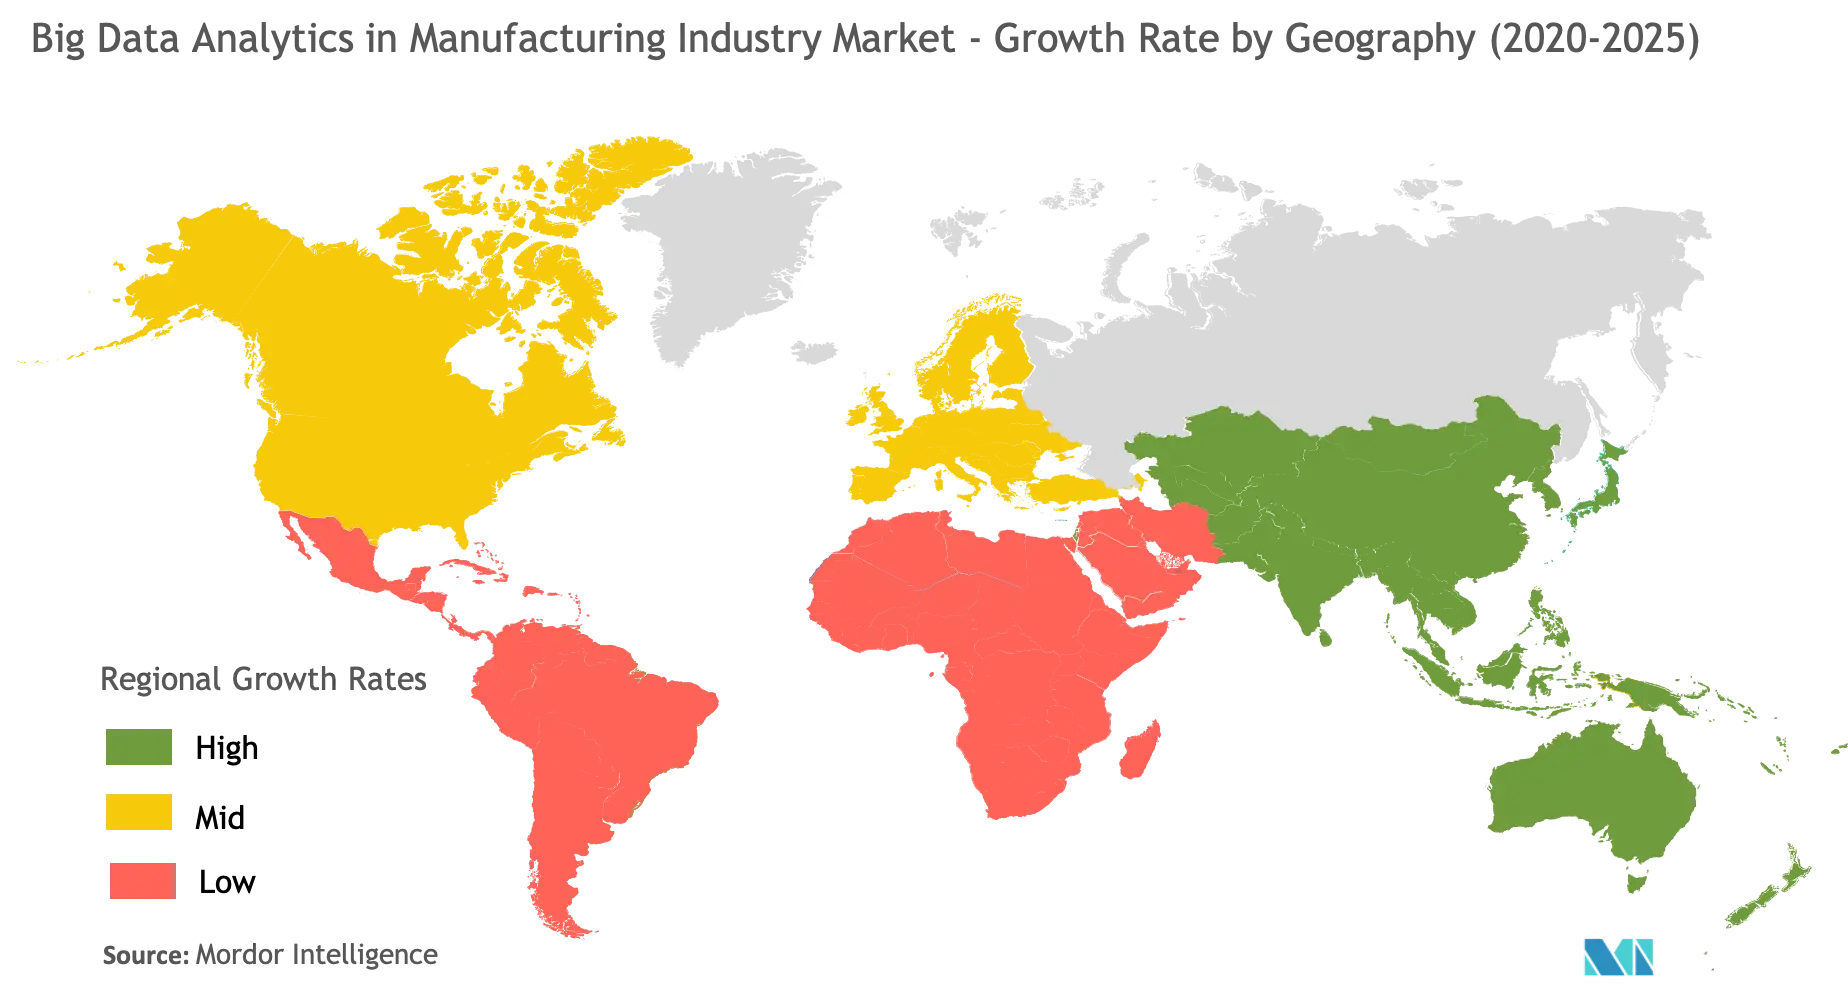  manufacturing industry data analysis